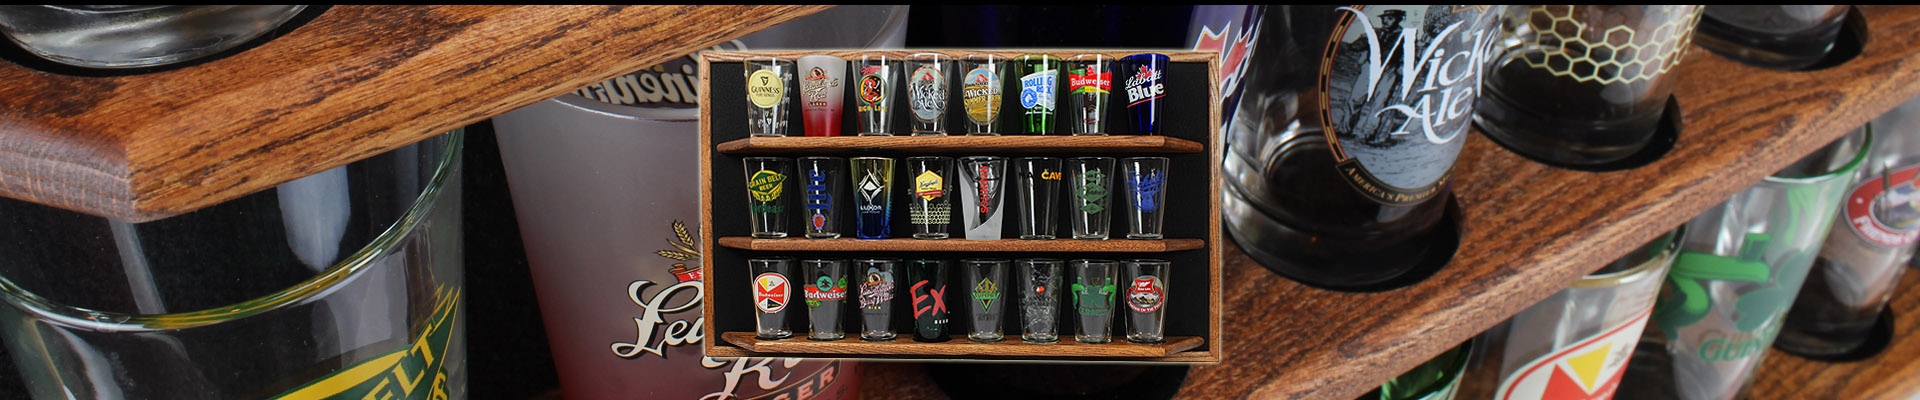 Beer pint glass display page